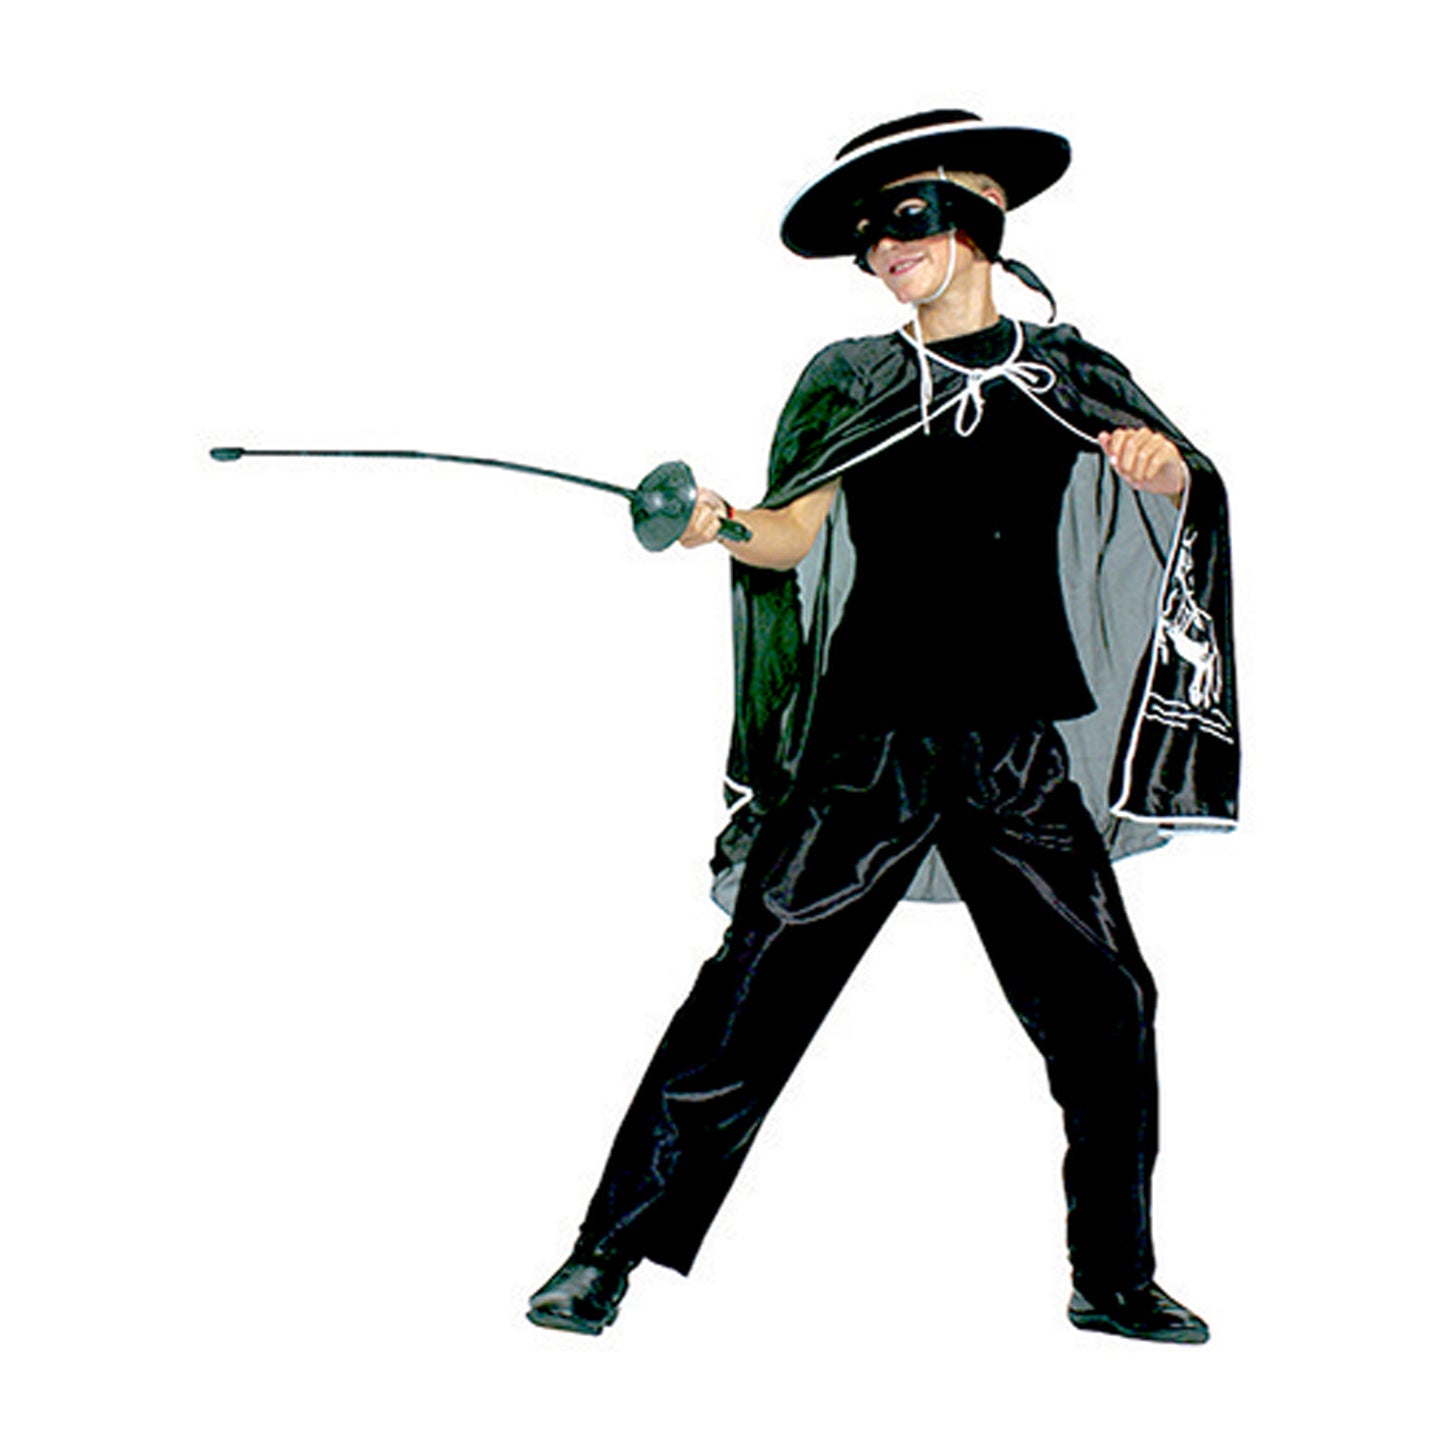 Zorro's Cape and Trousers